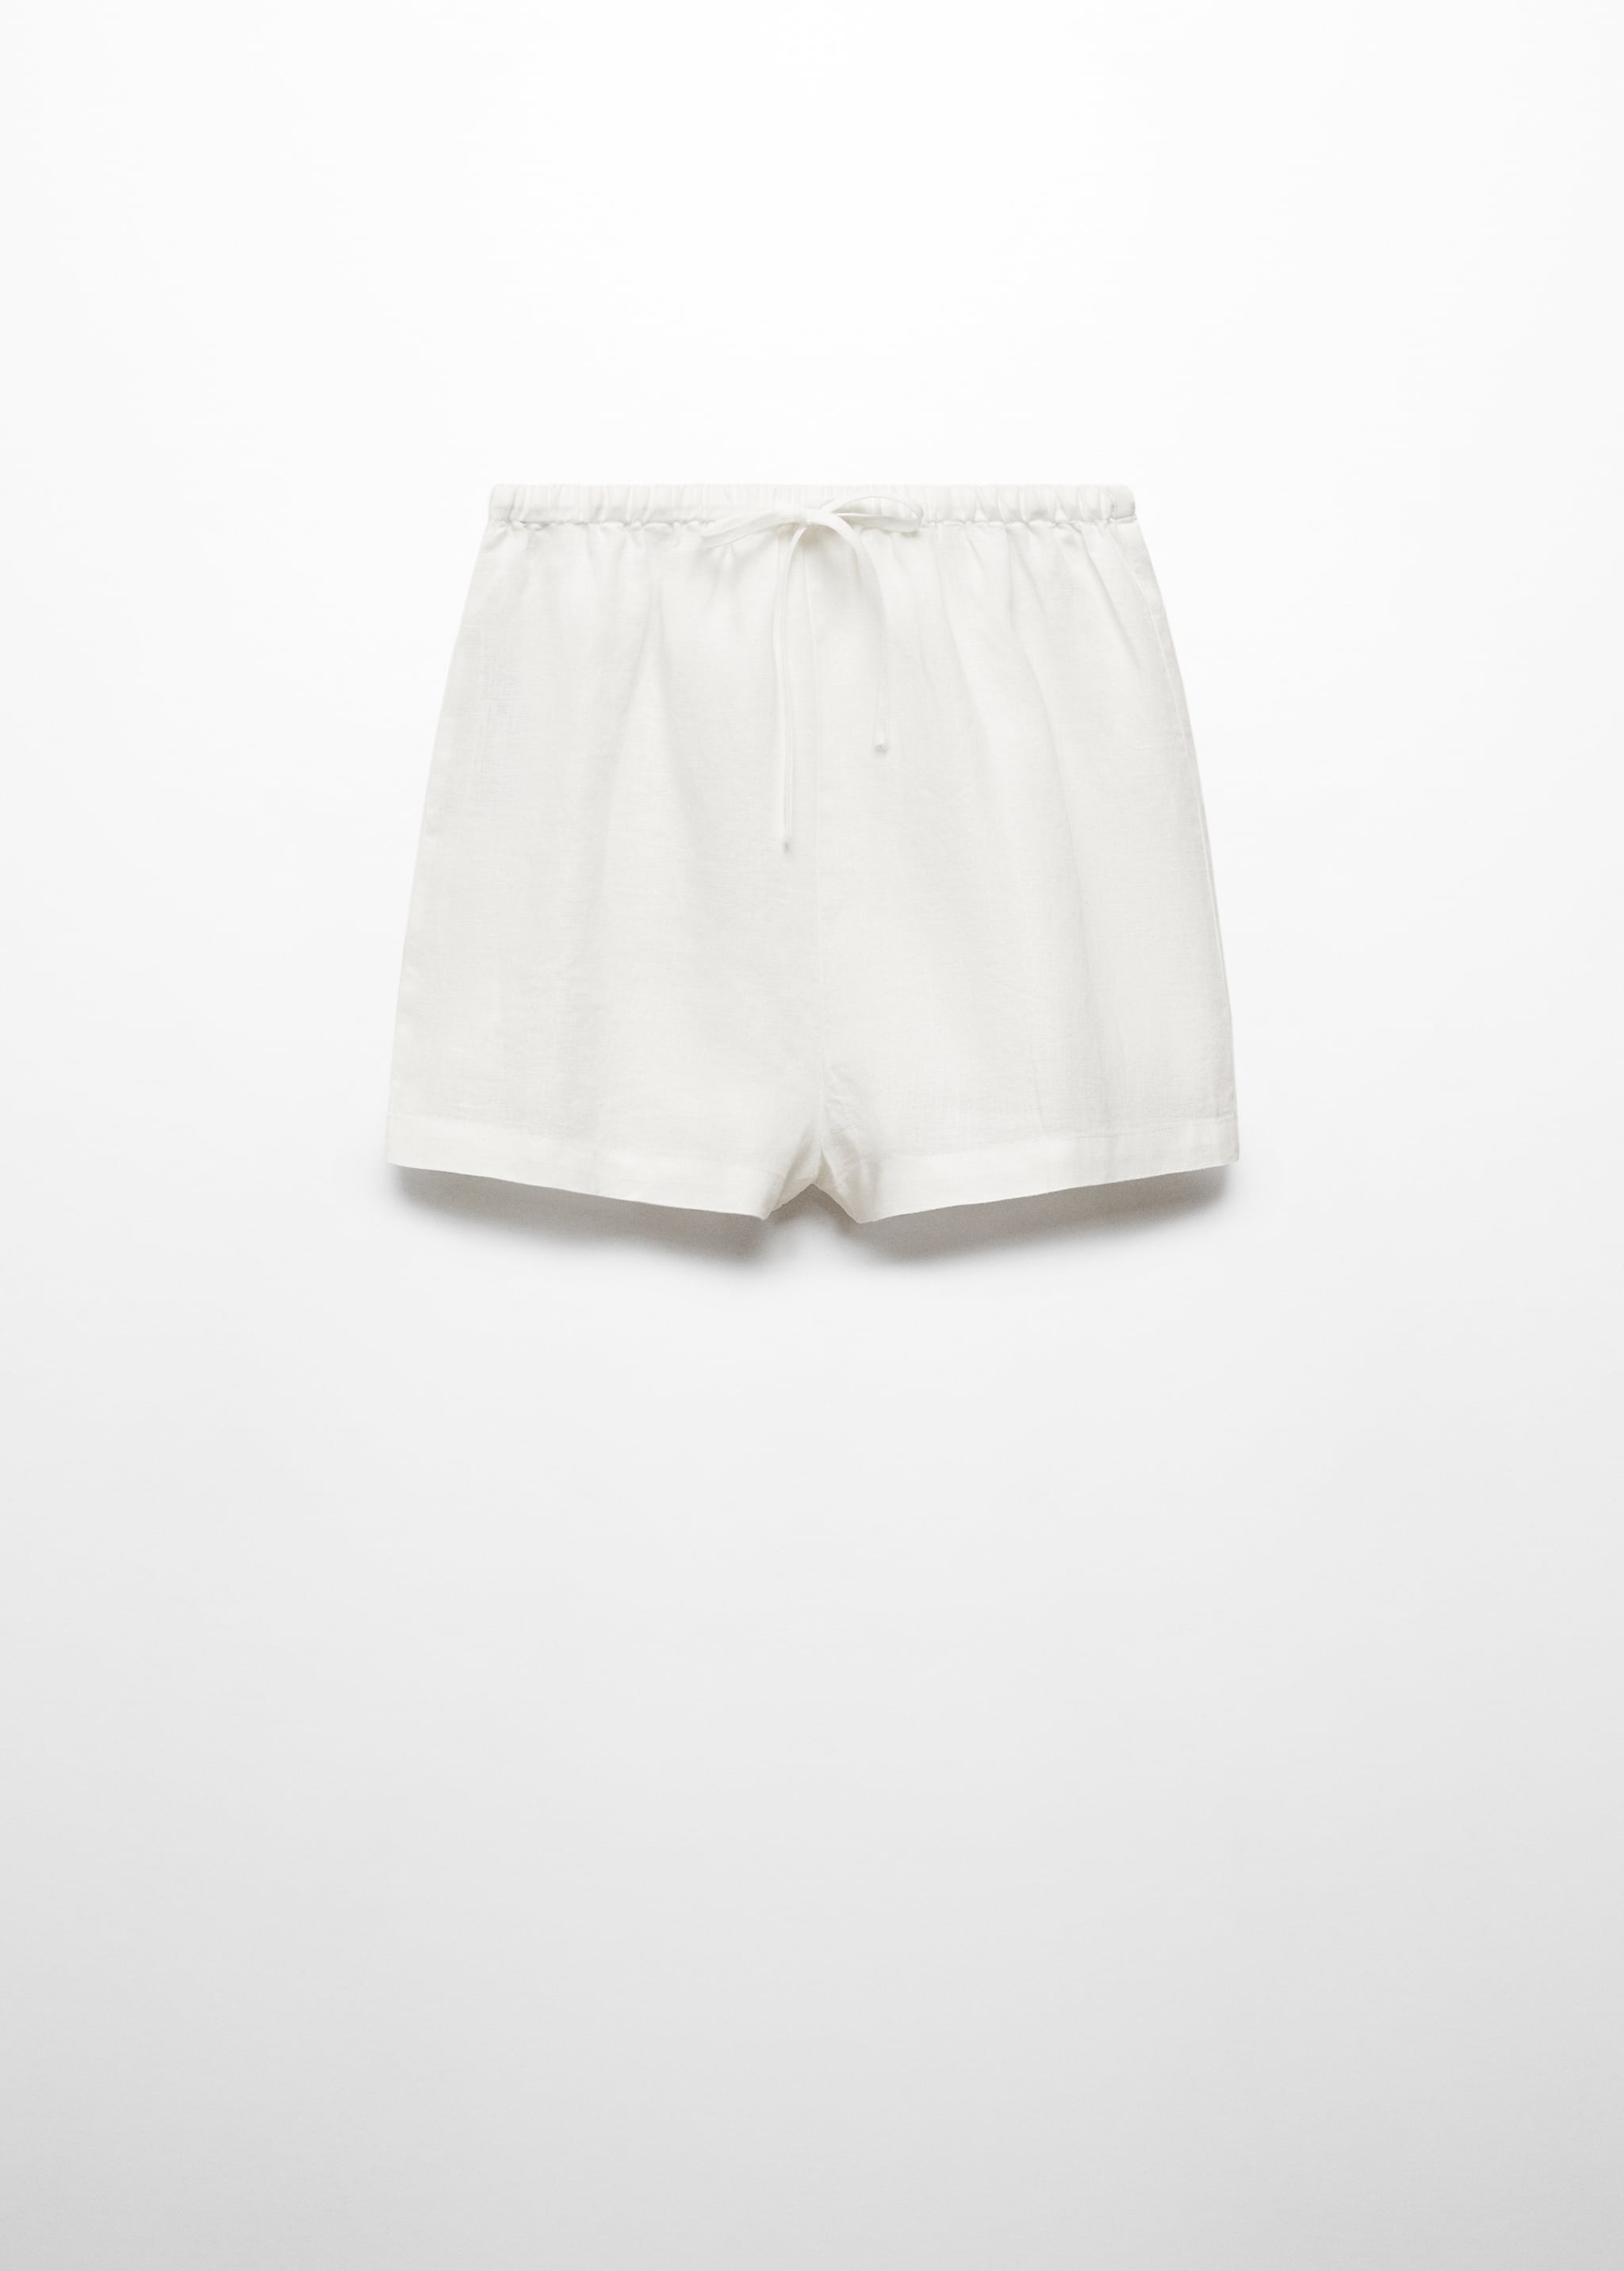 Linen pyjama shorts - Article without model